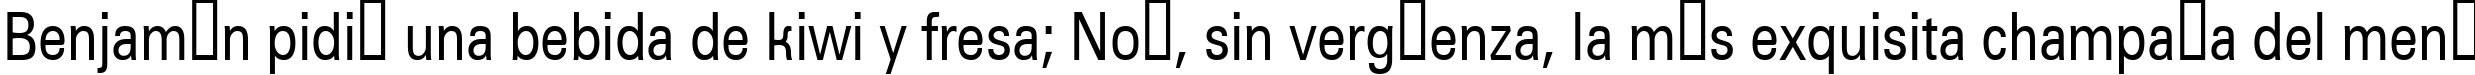 Пример написания шрифтом a_GroticNr текста на испанском